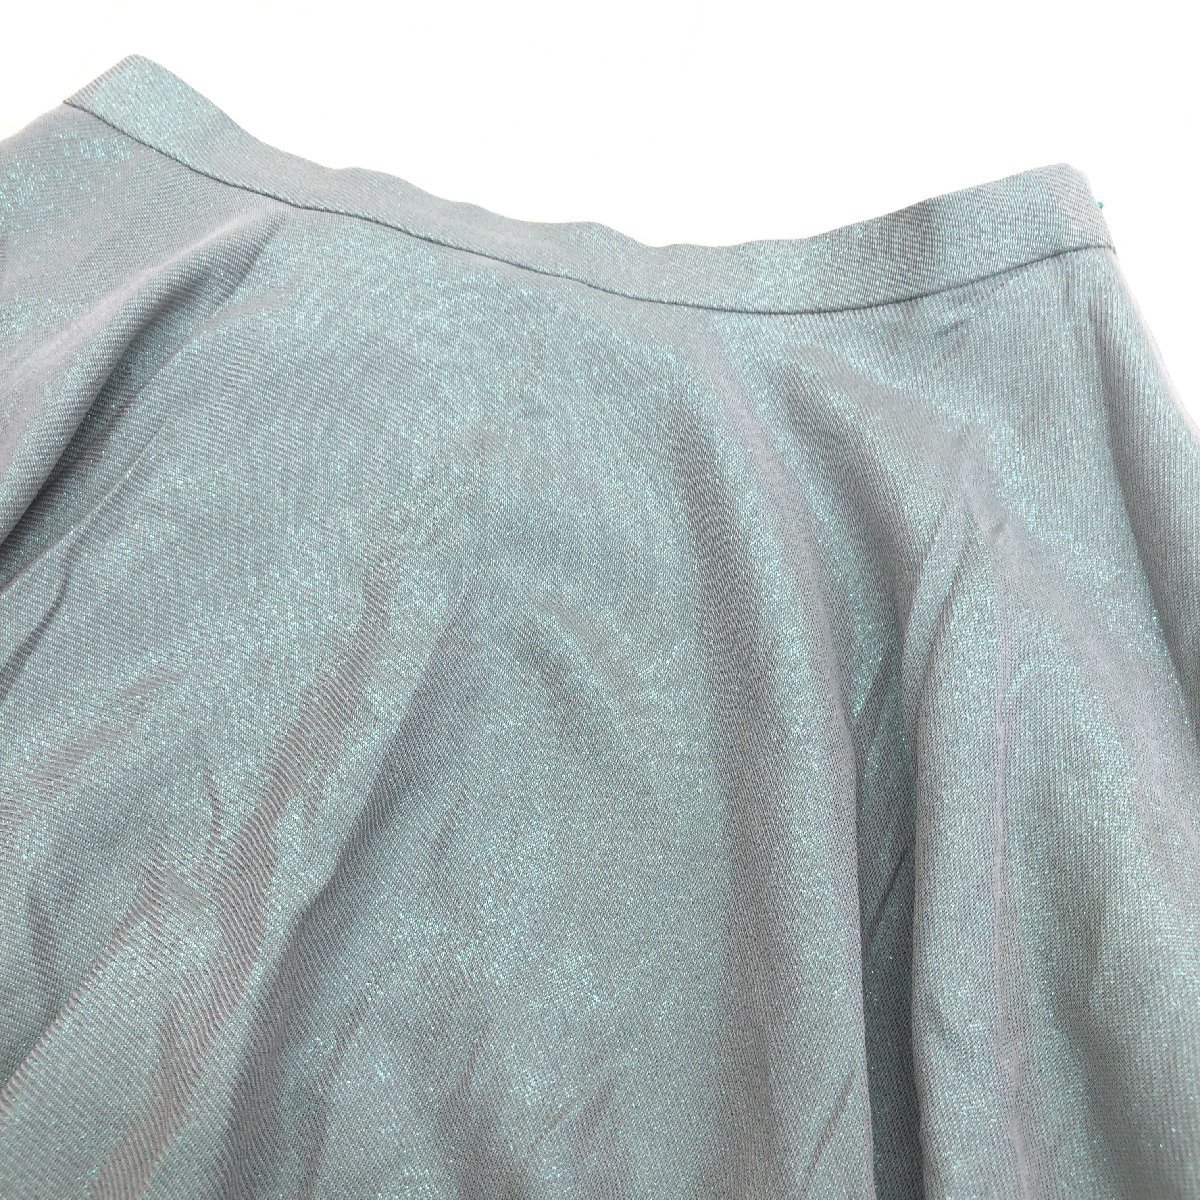 DRAWER ドゥロワー ユナイテッドアローズ シルク フレアスカート 36(S) w72 グレー×グリーン 日本製 ラメ加工 ボリュームスカート 女性用_画像4